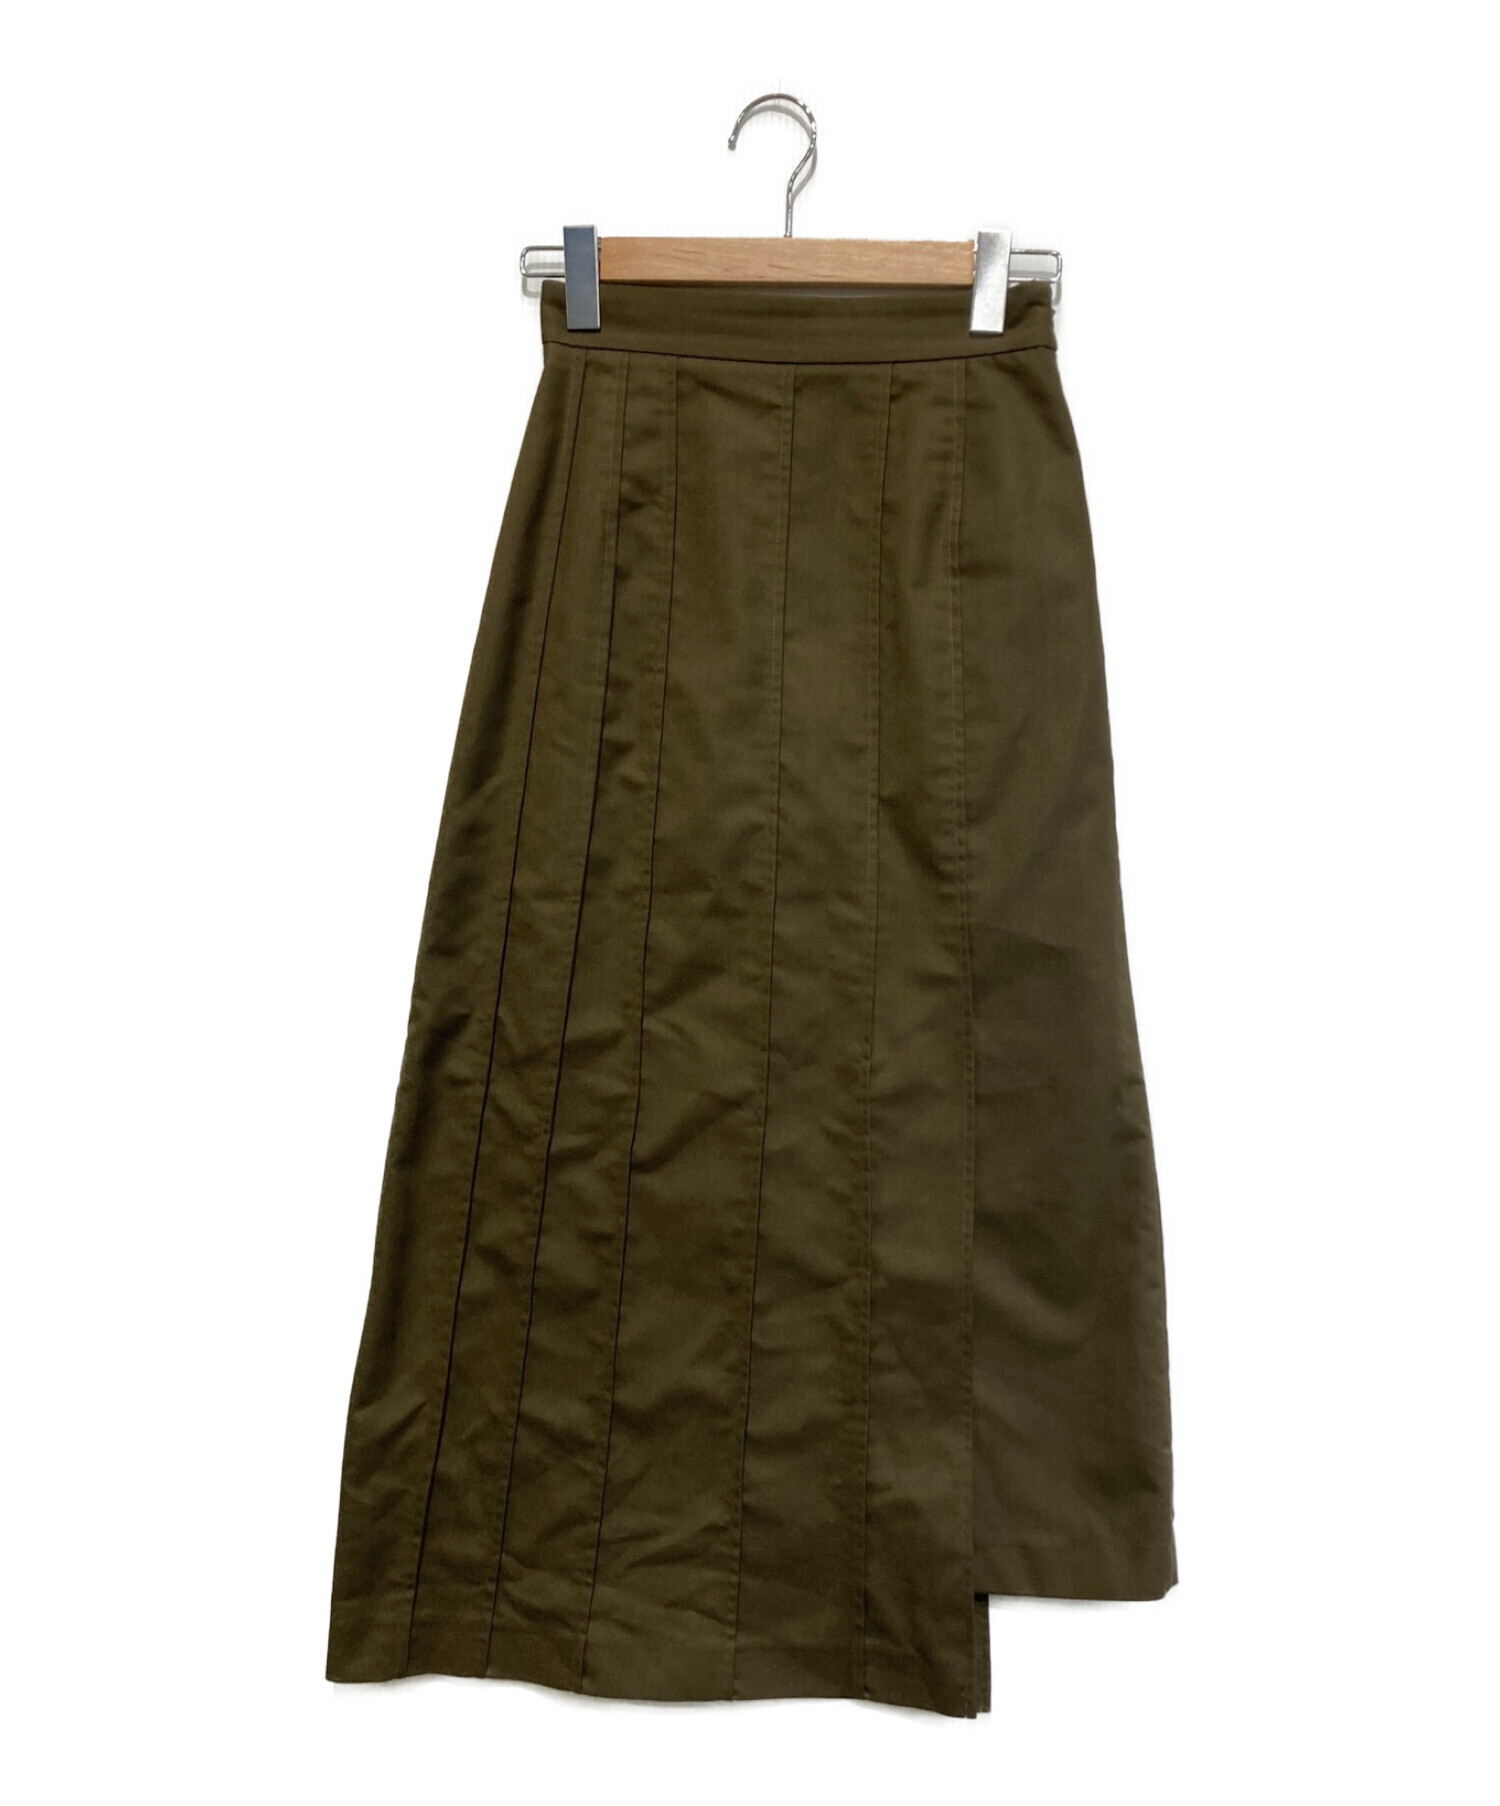 LE CIEL BLEU (ルシェルブルー) Pintuck Design Skirt ブラウン サイズ:34